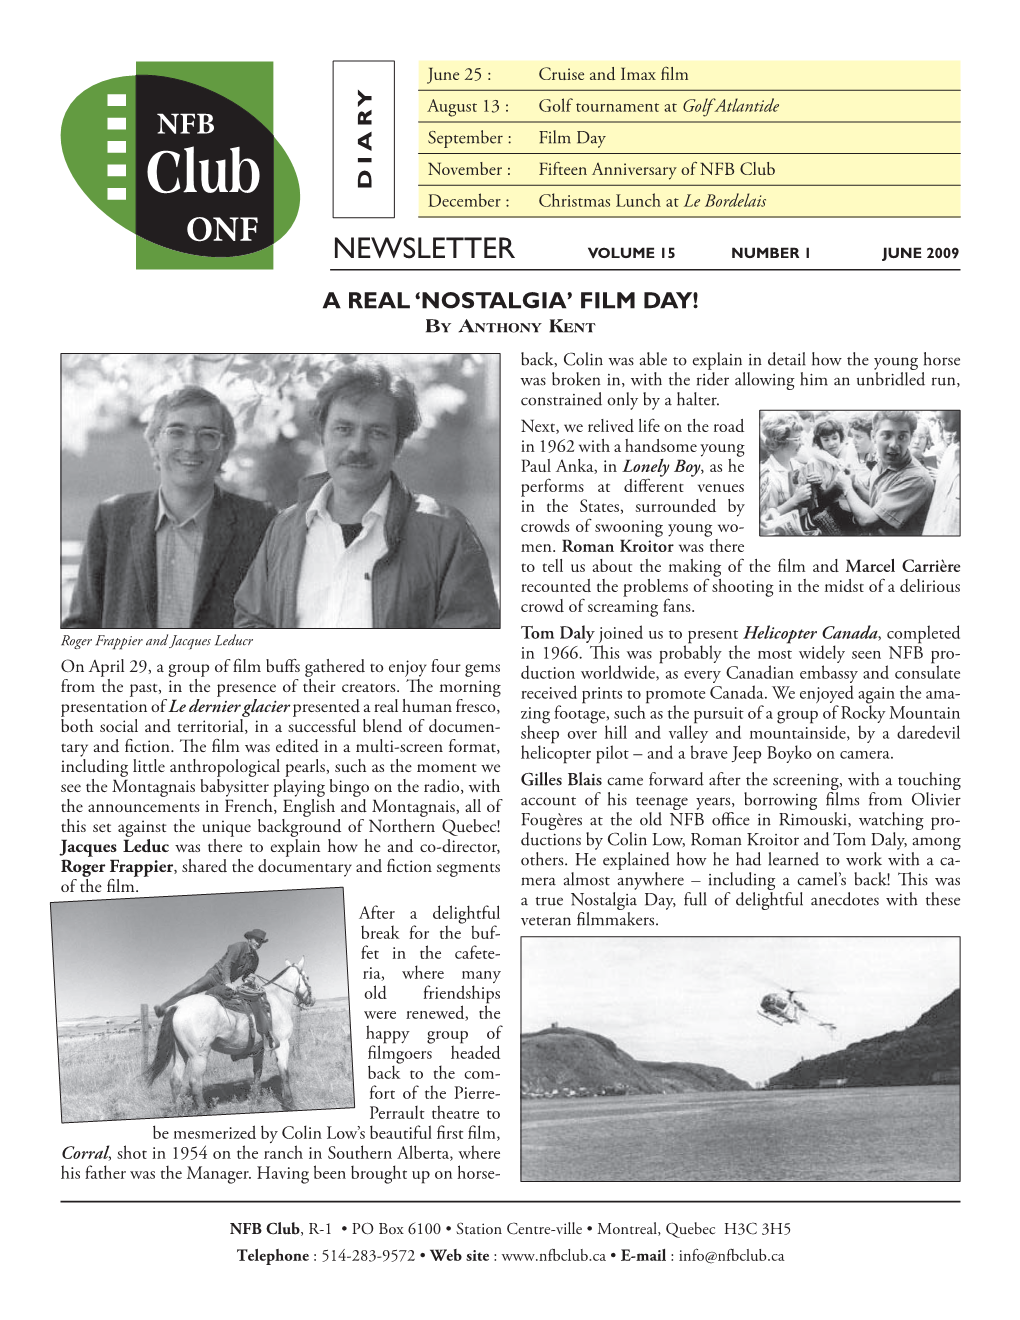 Newsletter Volume 15 Number 1 June 2009